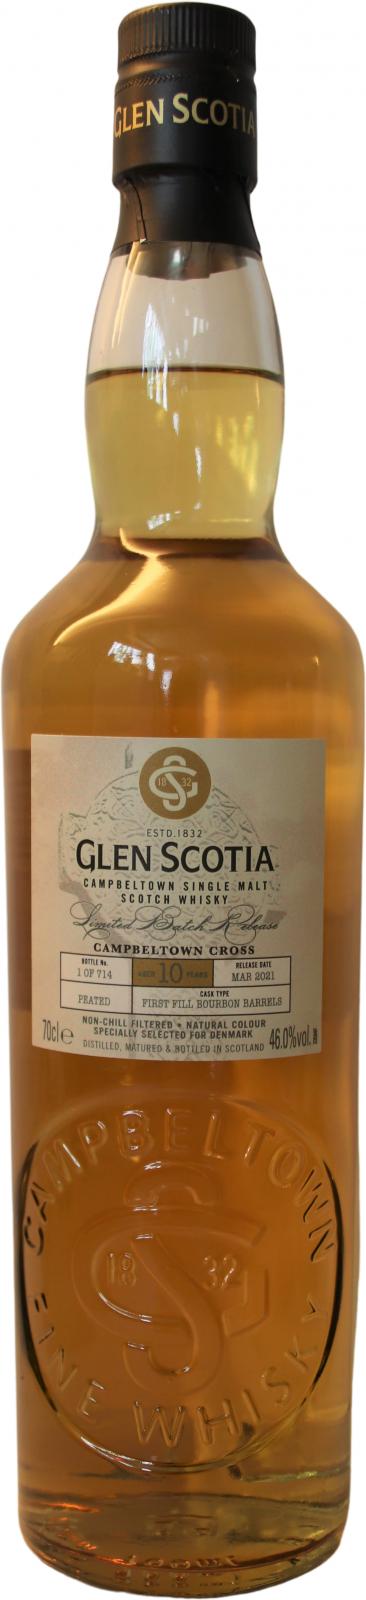 Glen Scotia 2010 - Peated